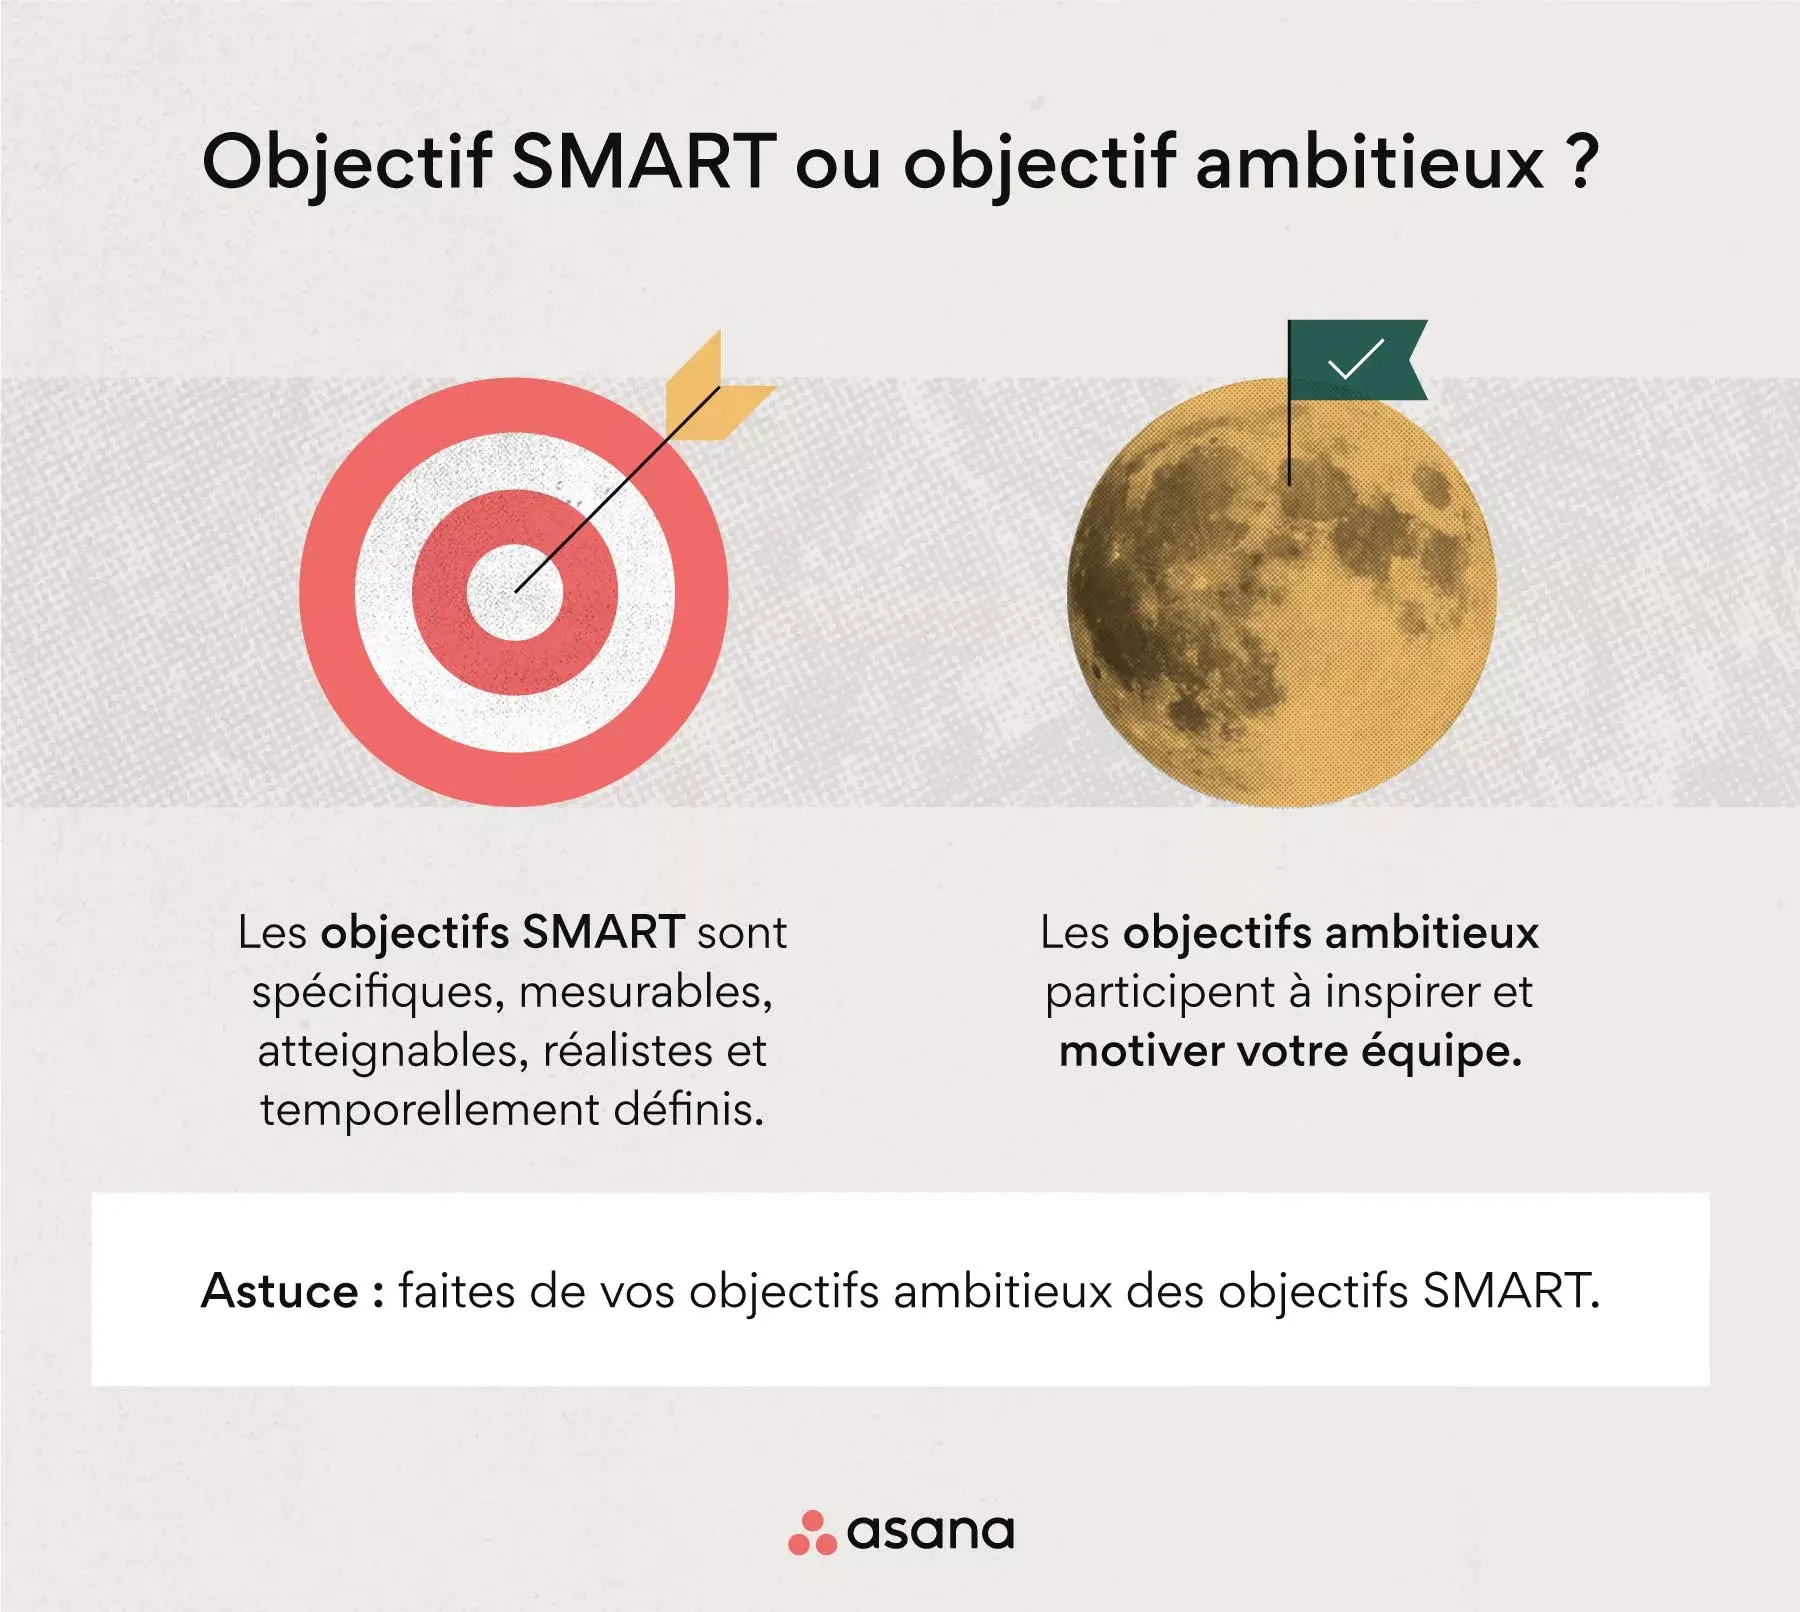 Objectif SMART ou objectif ambitieux ?